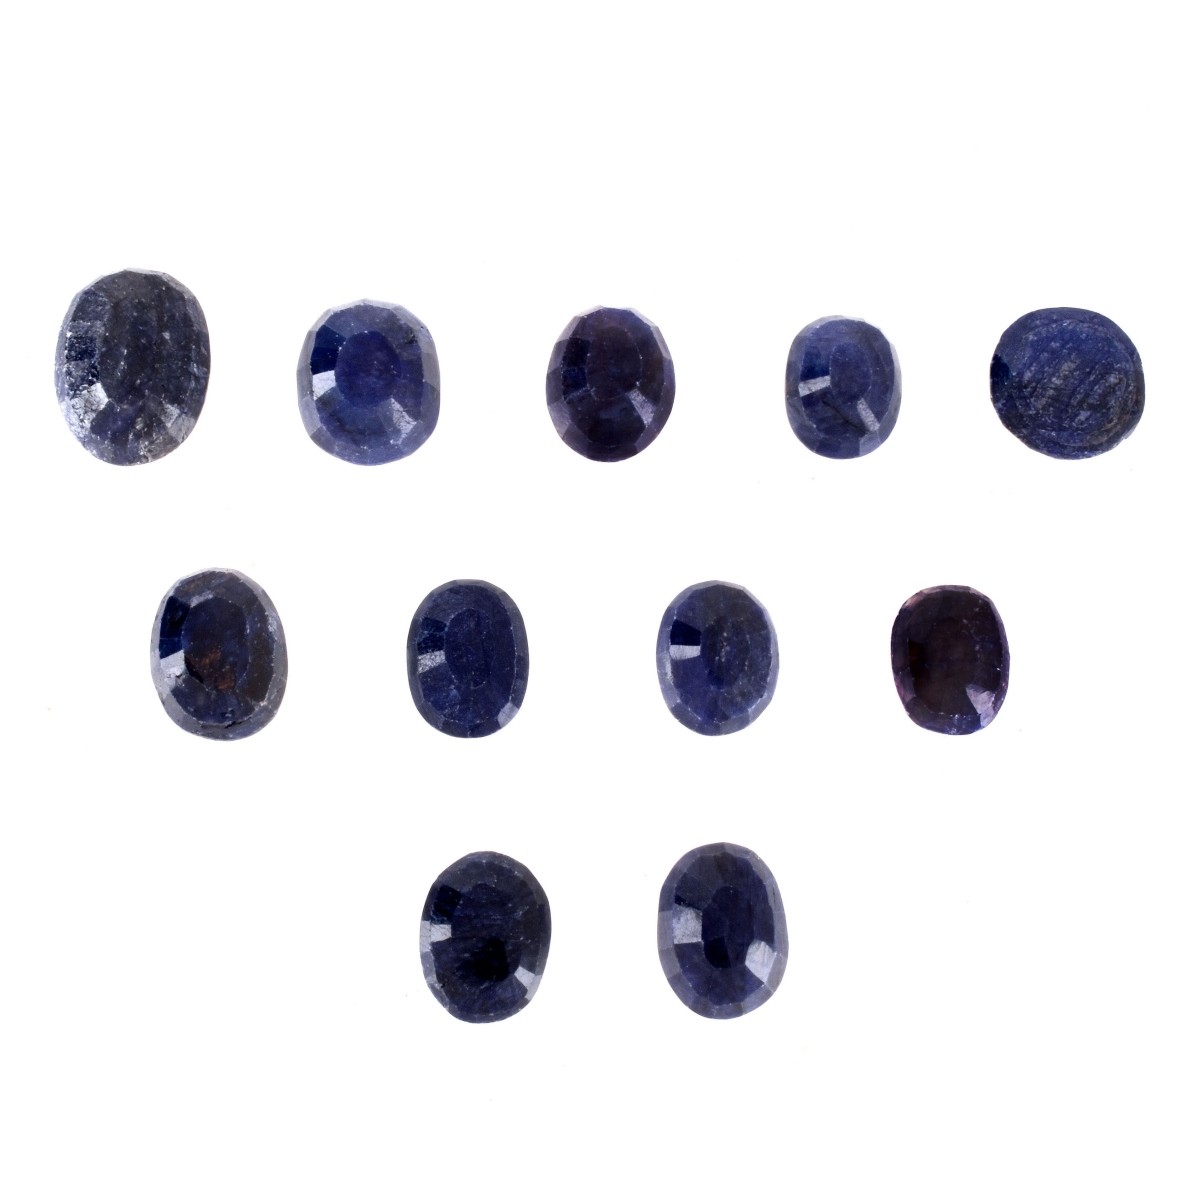 Eleven (11) Loose Sapphire Gemstone